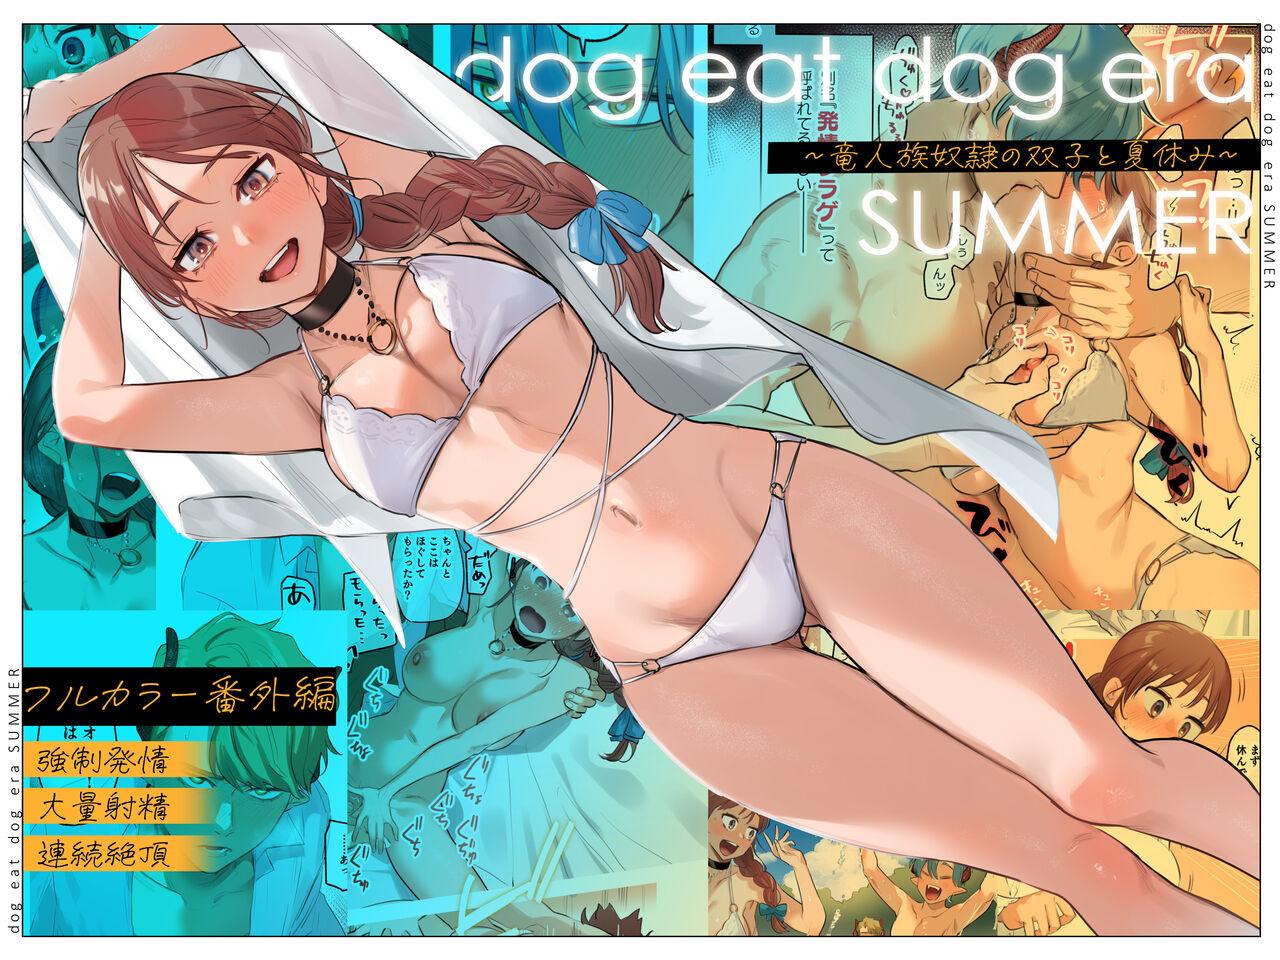 Bigbutt dog eat dog era SUMMER ∼ryūjinzoku dorei no futago to natsuyasumi | ∼Summer vacation with the twin slaves of the dragon race∼ - Original Women Sucking - Picture 1